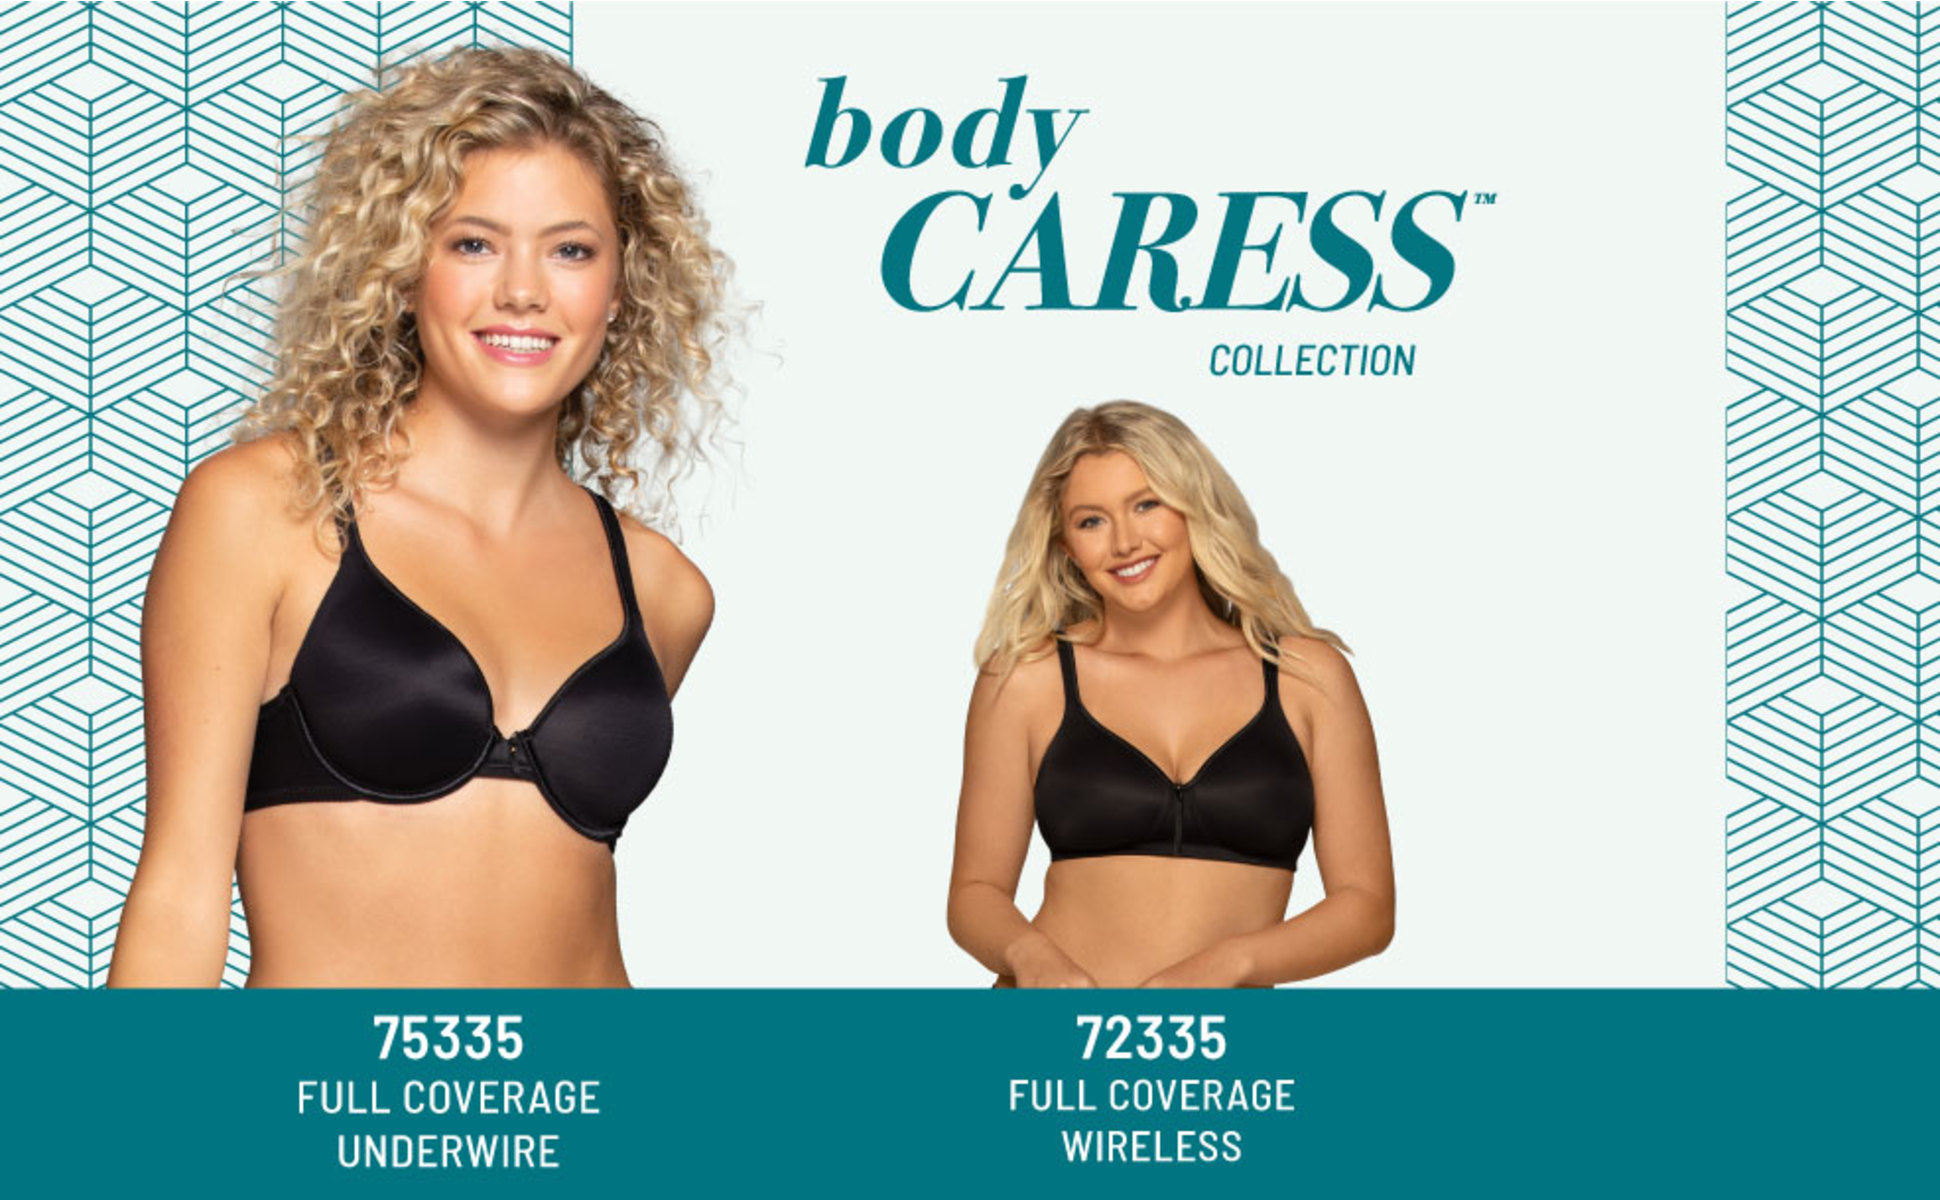 Vanity Fair Women's Body Caress Full Coverage Convertible Bra